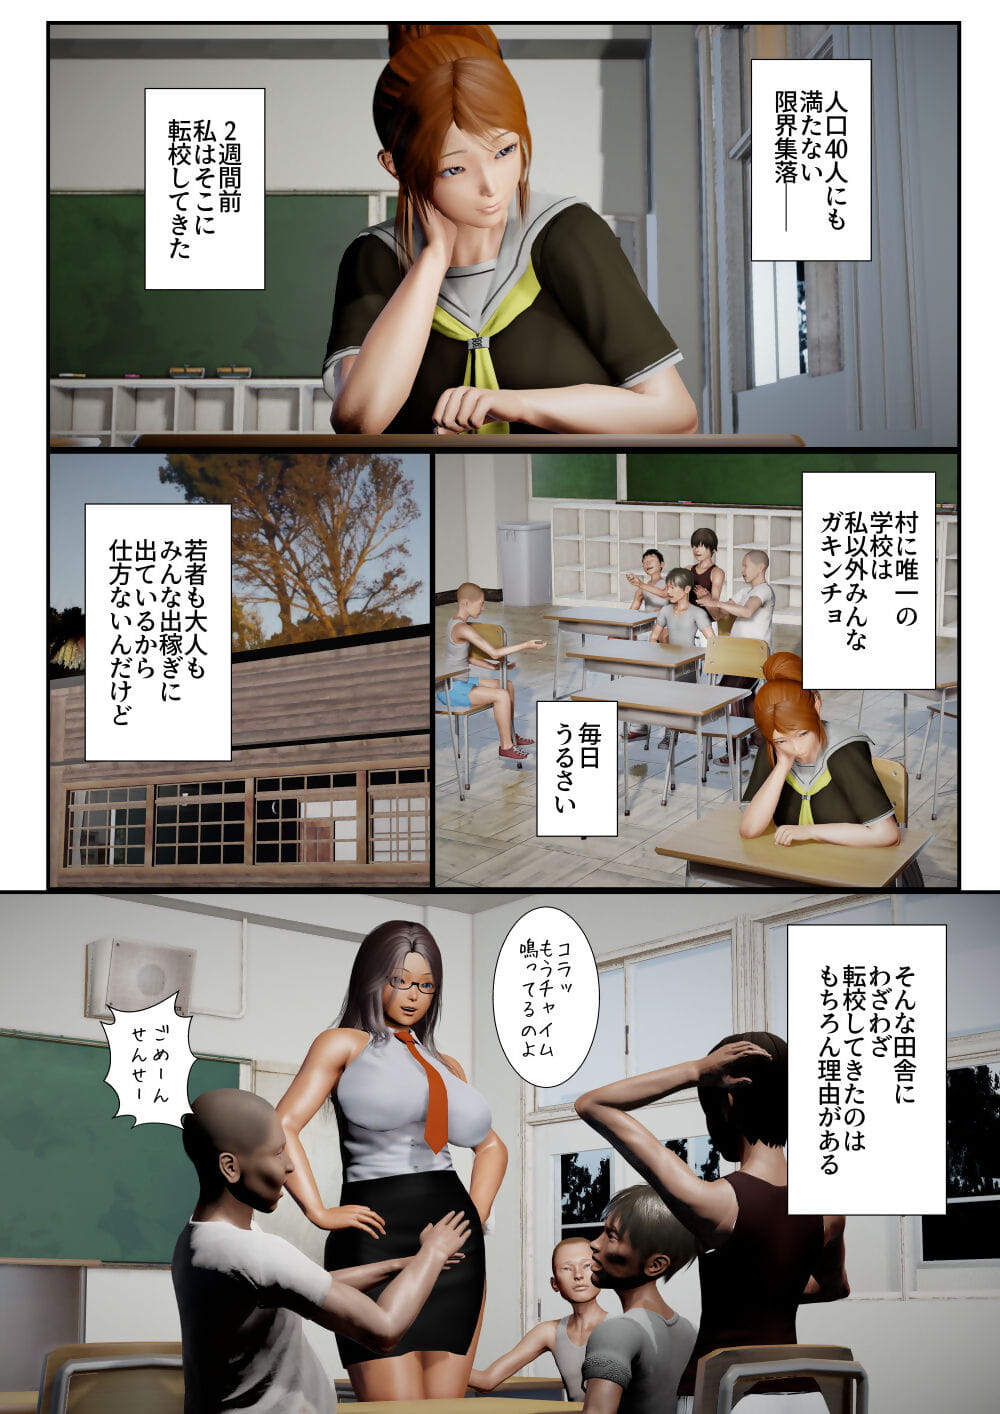 goriramu Touma kenshi shiziizu şeytan kılıç dizi PART 3 page 1